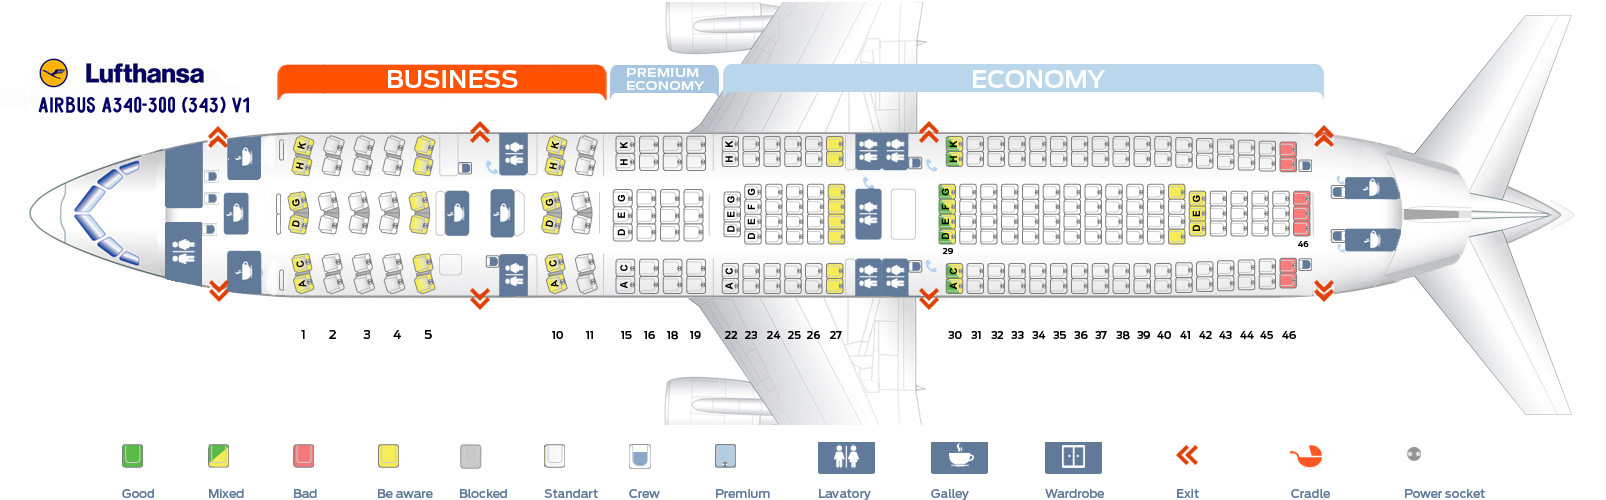 Seat_map_Lufthansa_Airbus_A340-300_v1.jpg